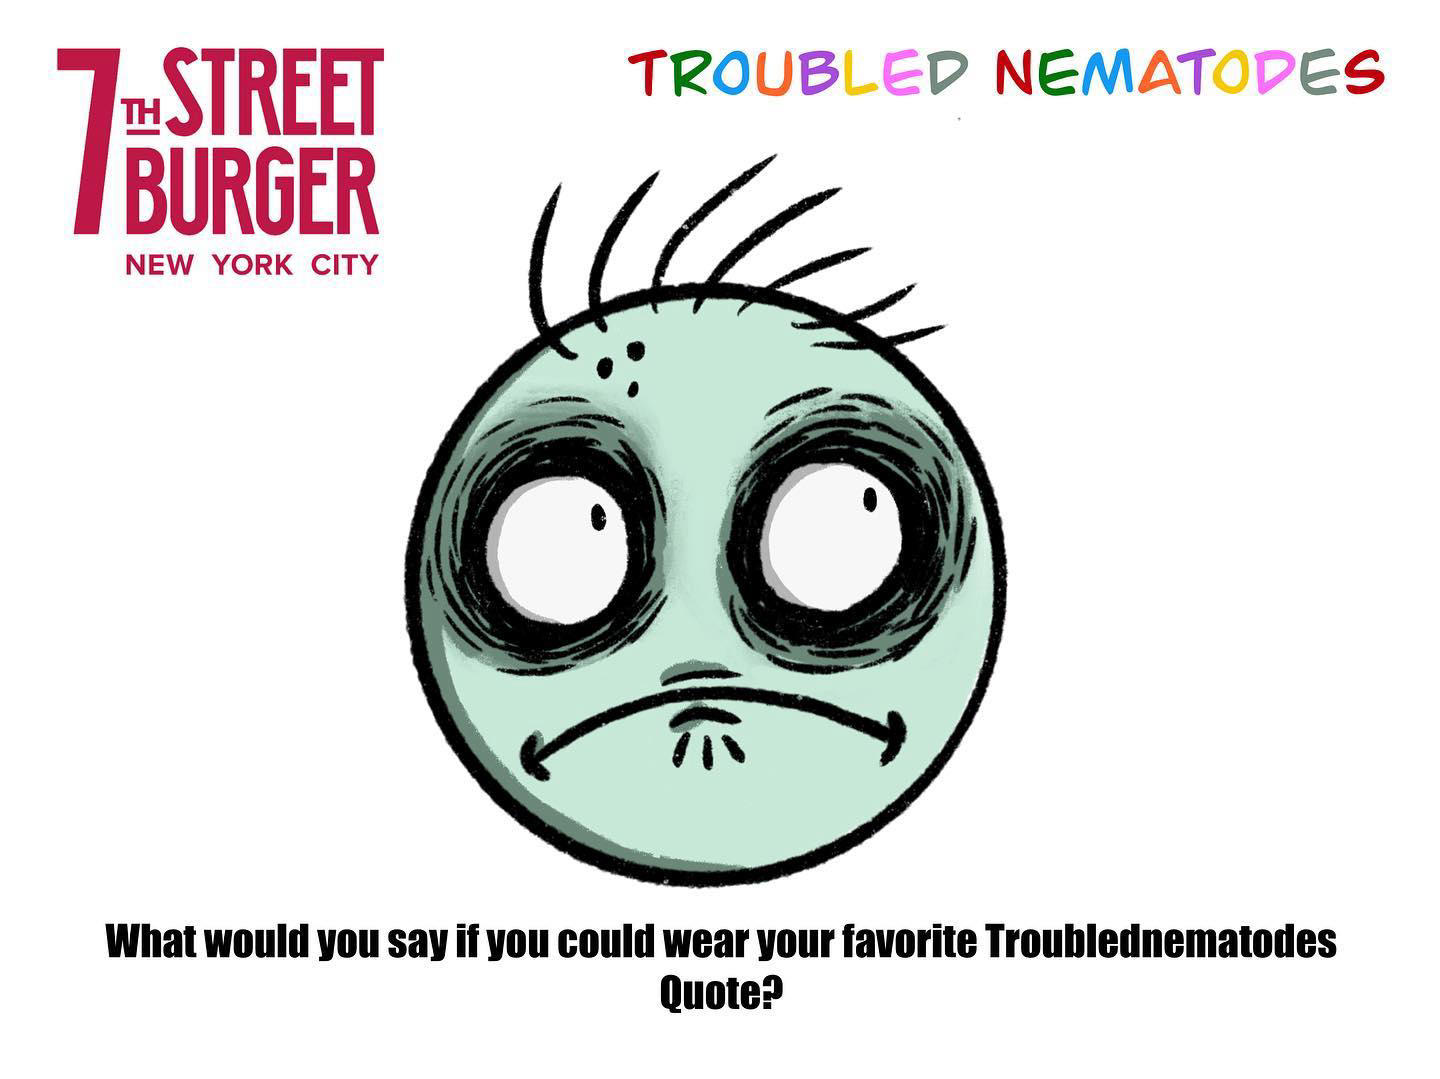 Troubled Nematodes x #7thstreetburgernyc merch